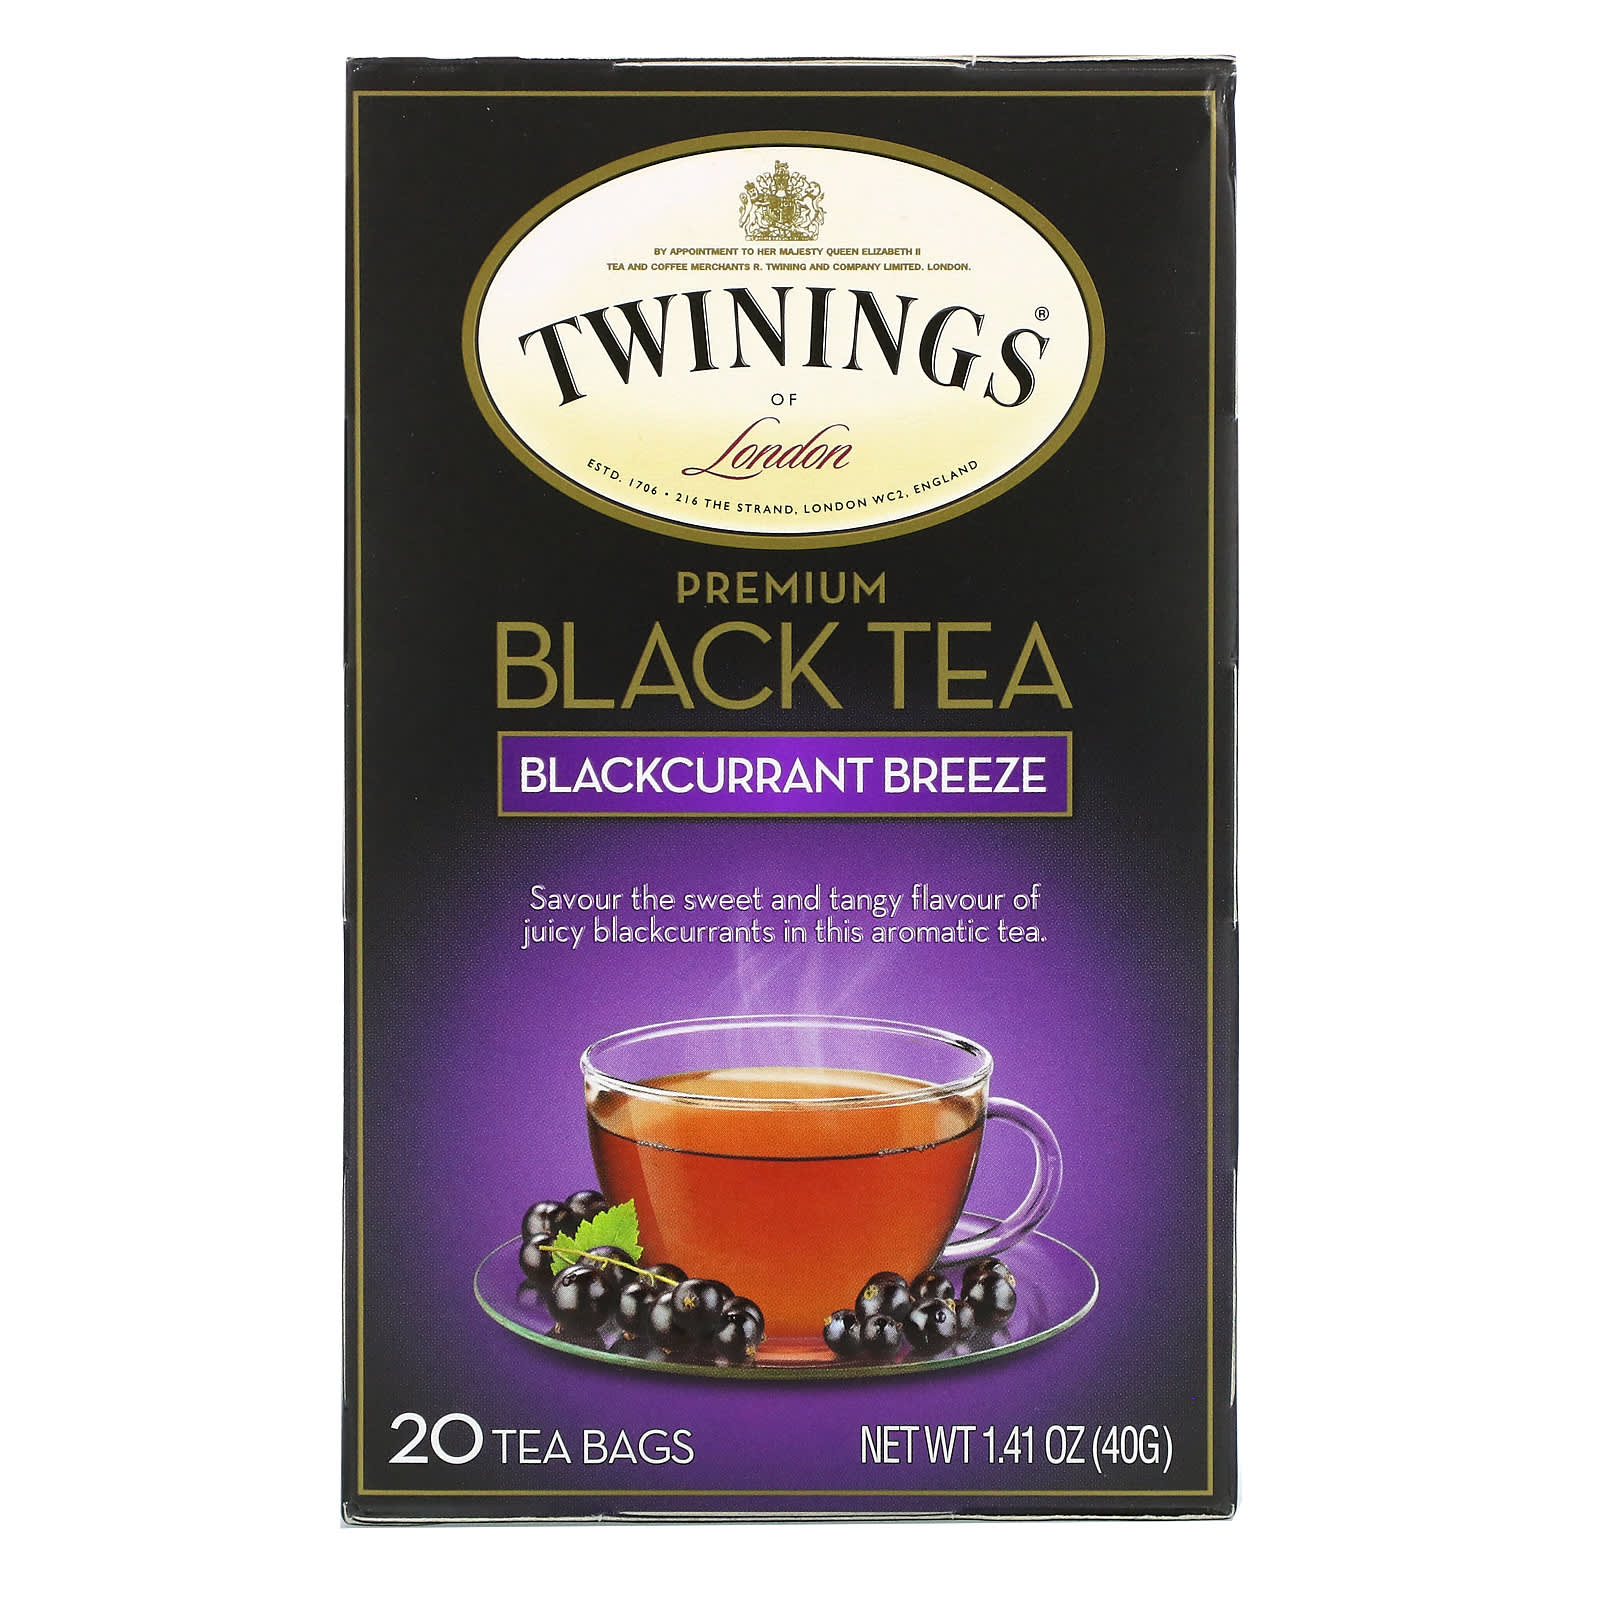 Twinings, Premium Black Tea, Blackcurrant Breeze, 20 Tea Bags, 1.41 oz ...